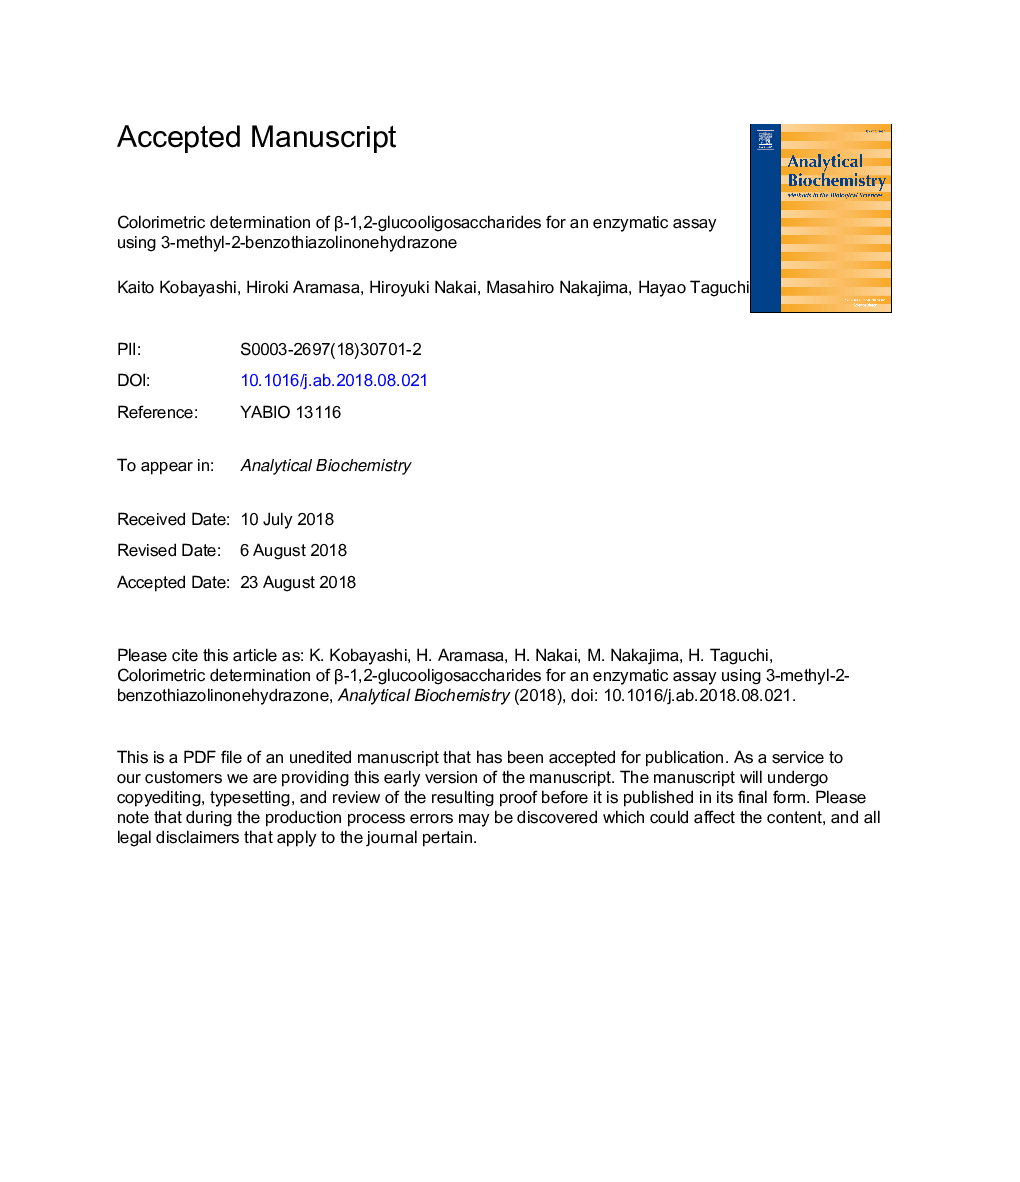 Colorimetric determination of Î²-1,2-glucooligosaccharides for an enzymatic assay using 3-methyl-2-benzothiazolinonehydrazone